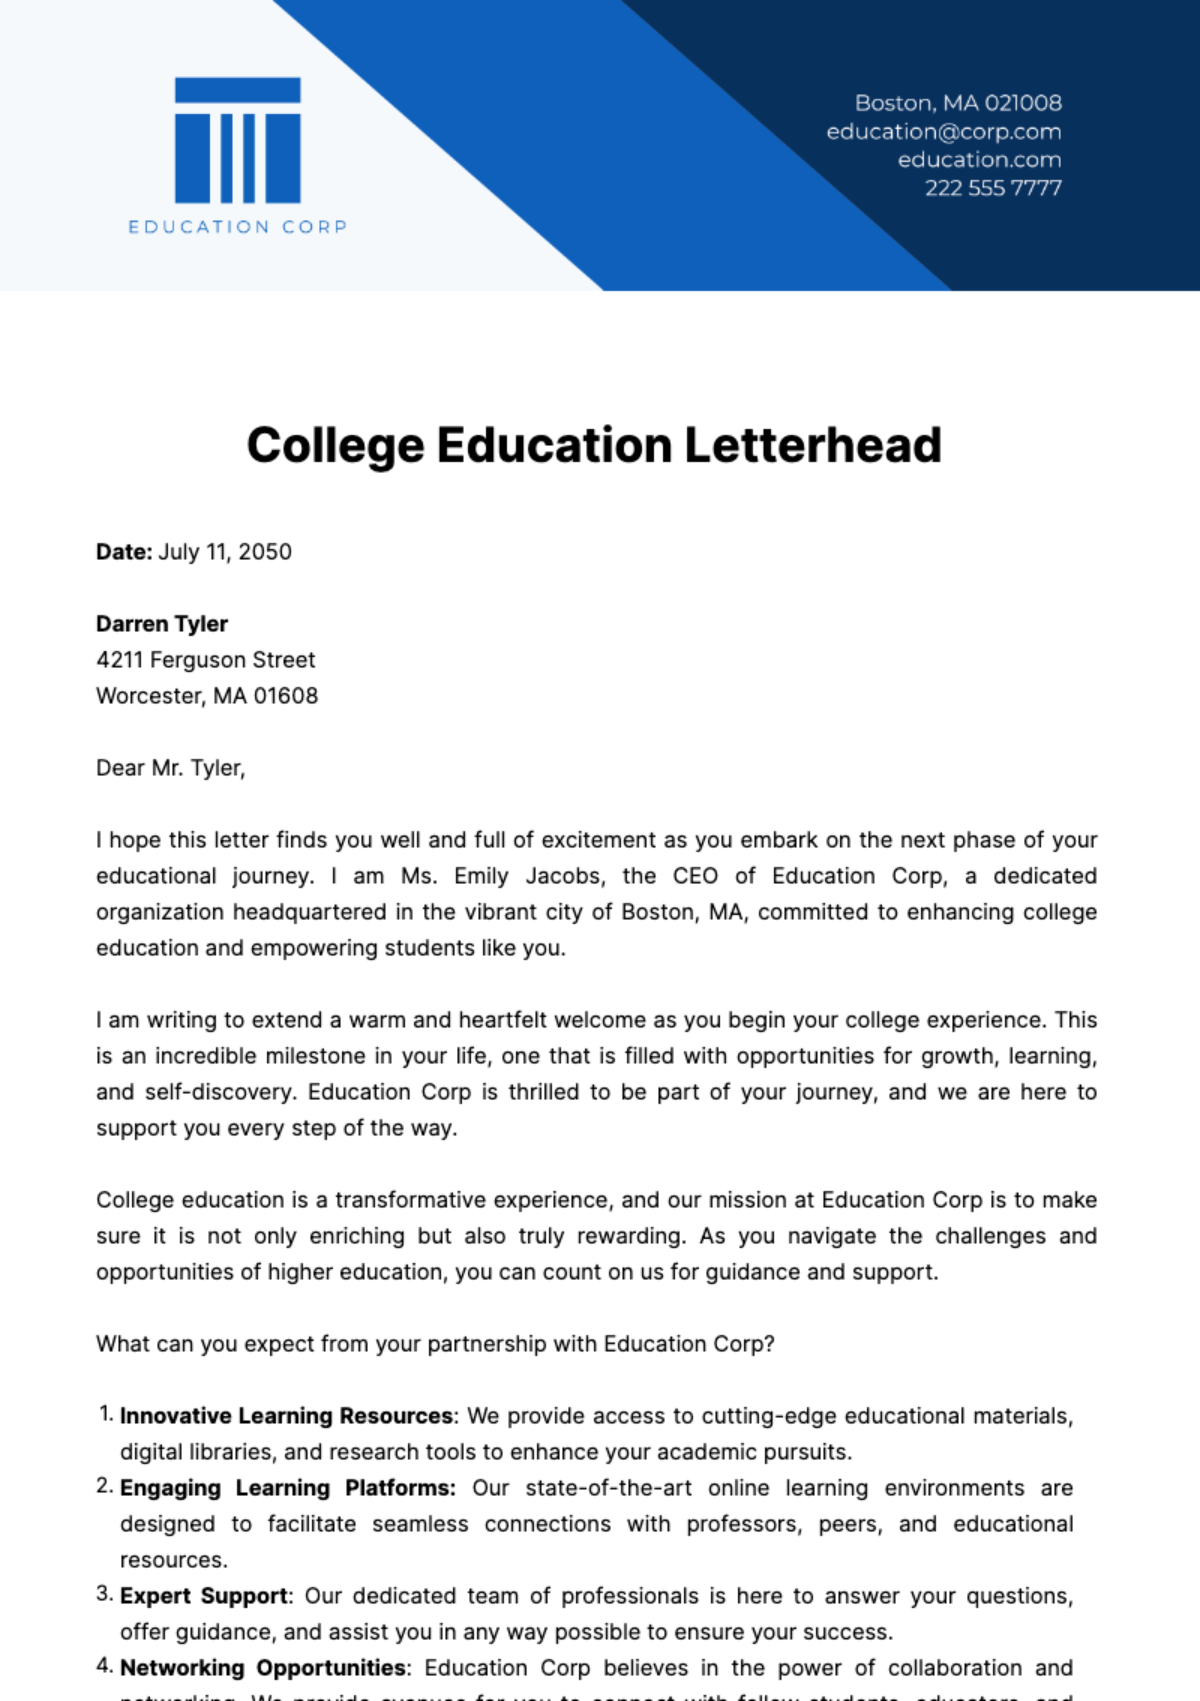 Free College Education Letterhead Template